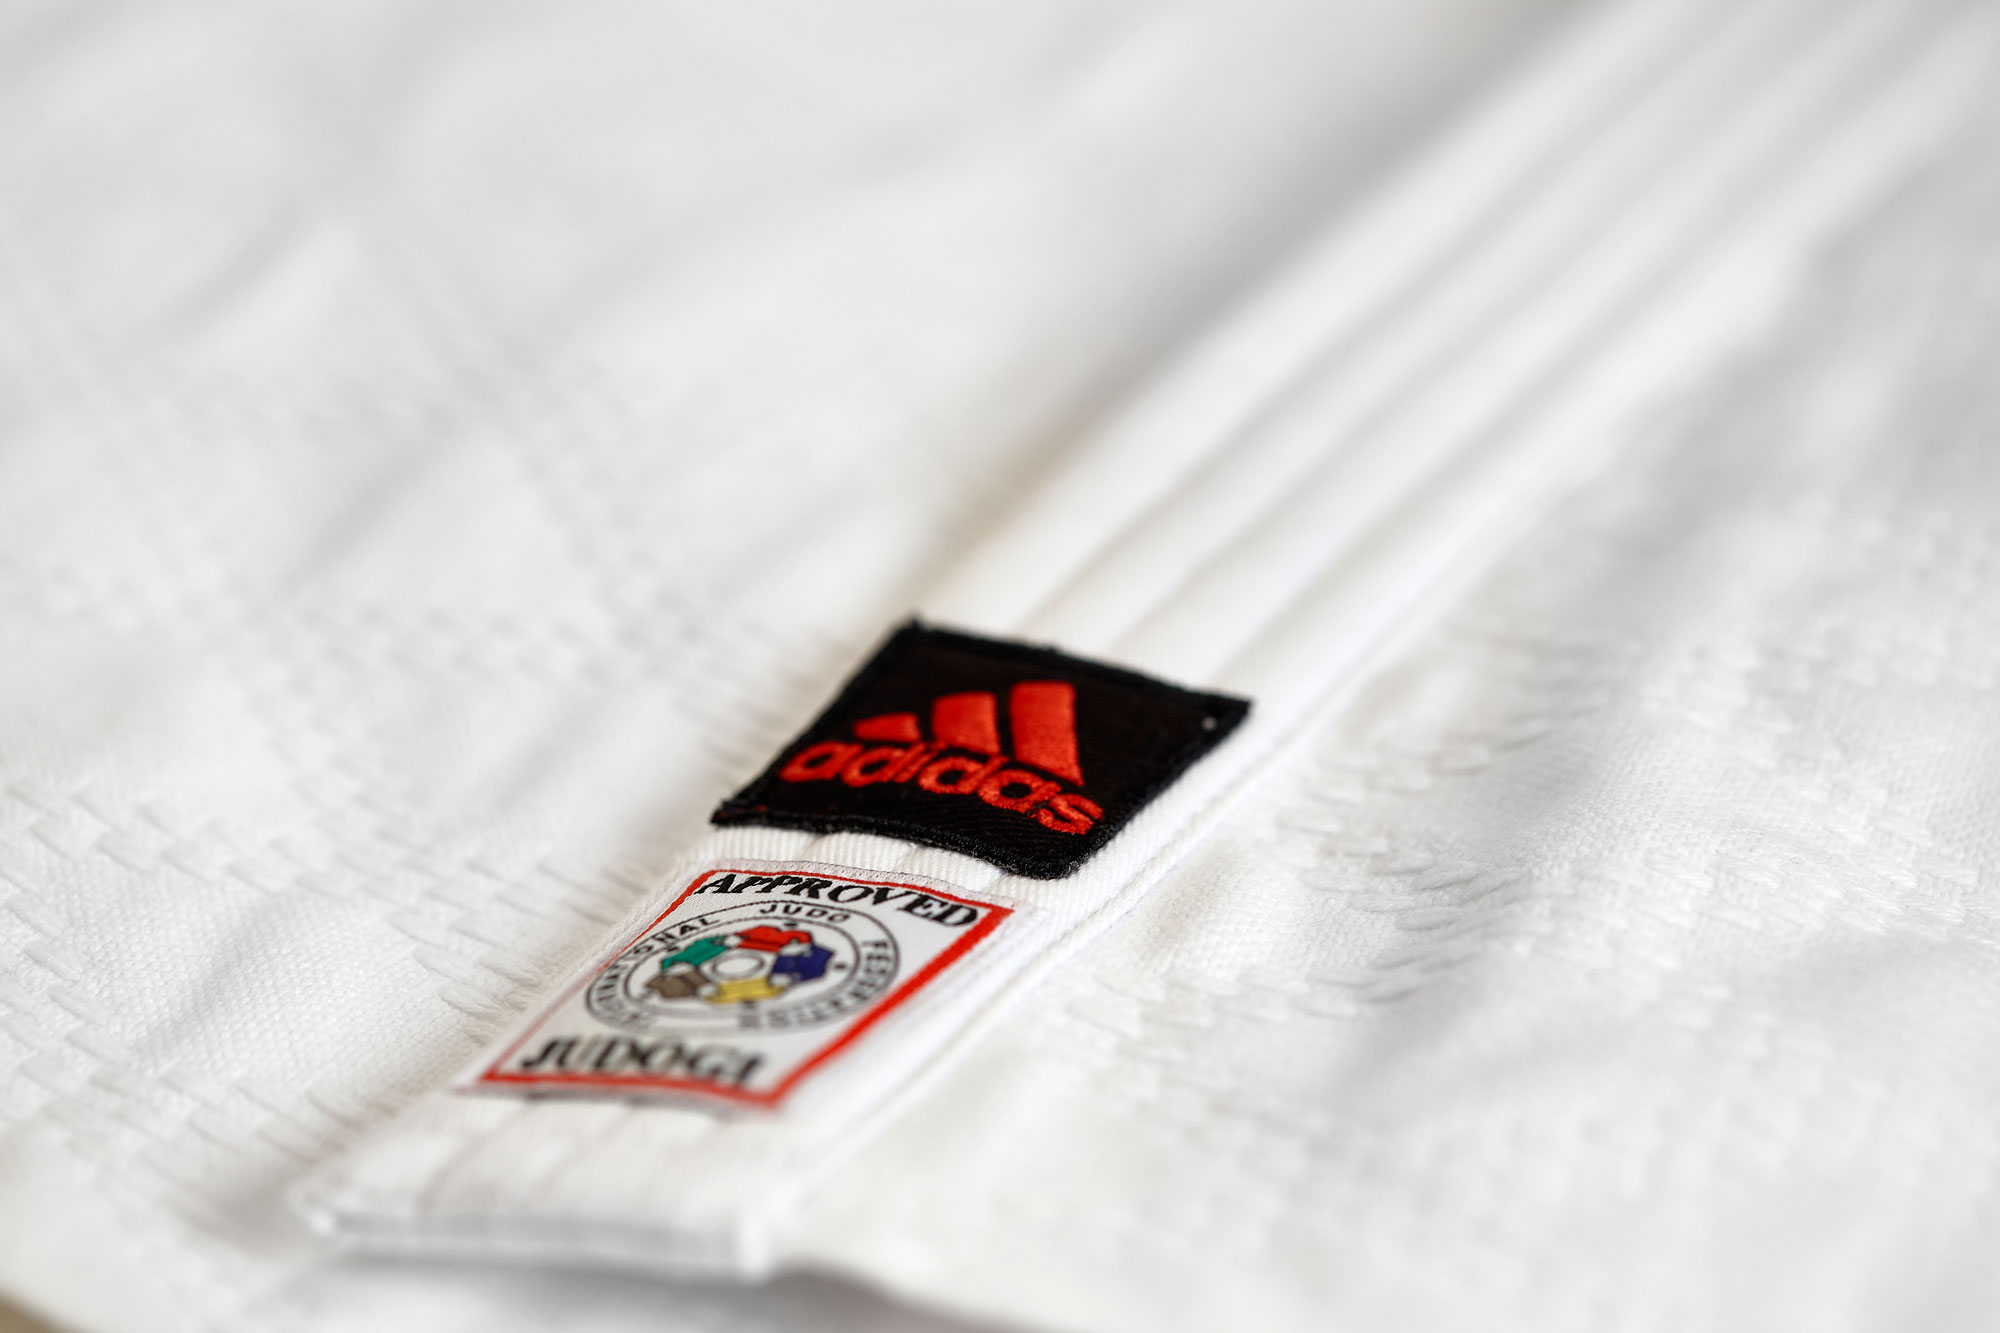 adidas judo gi Champion II JIJF, white / red stripes